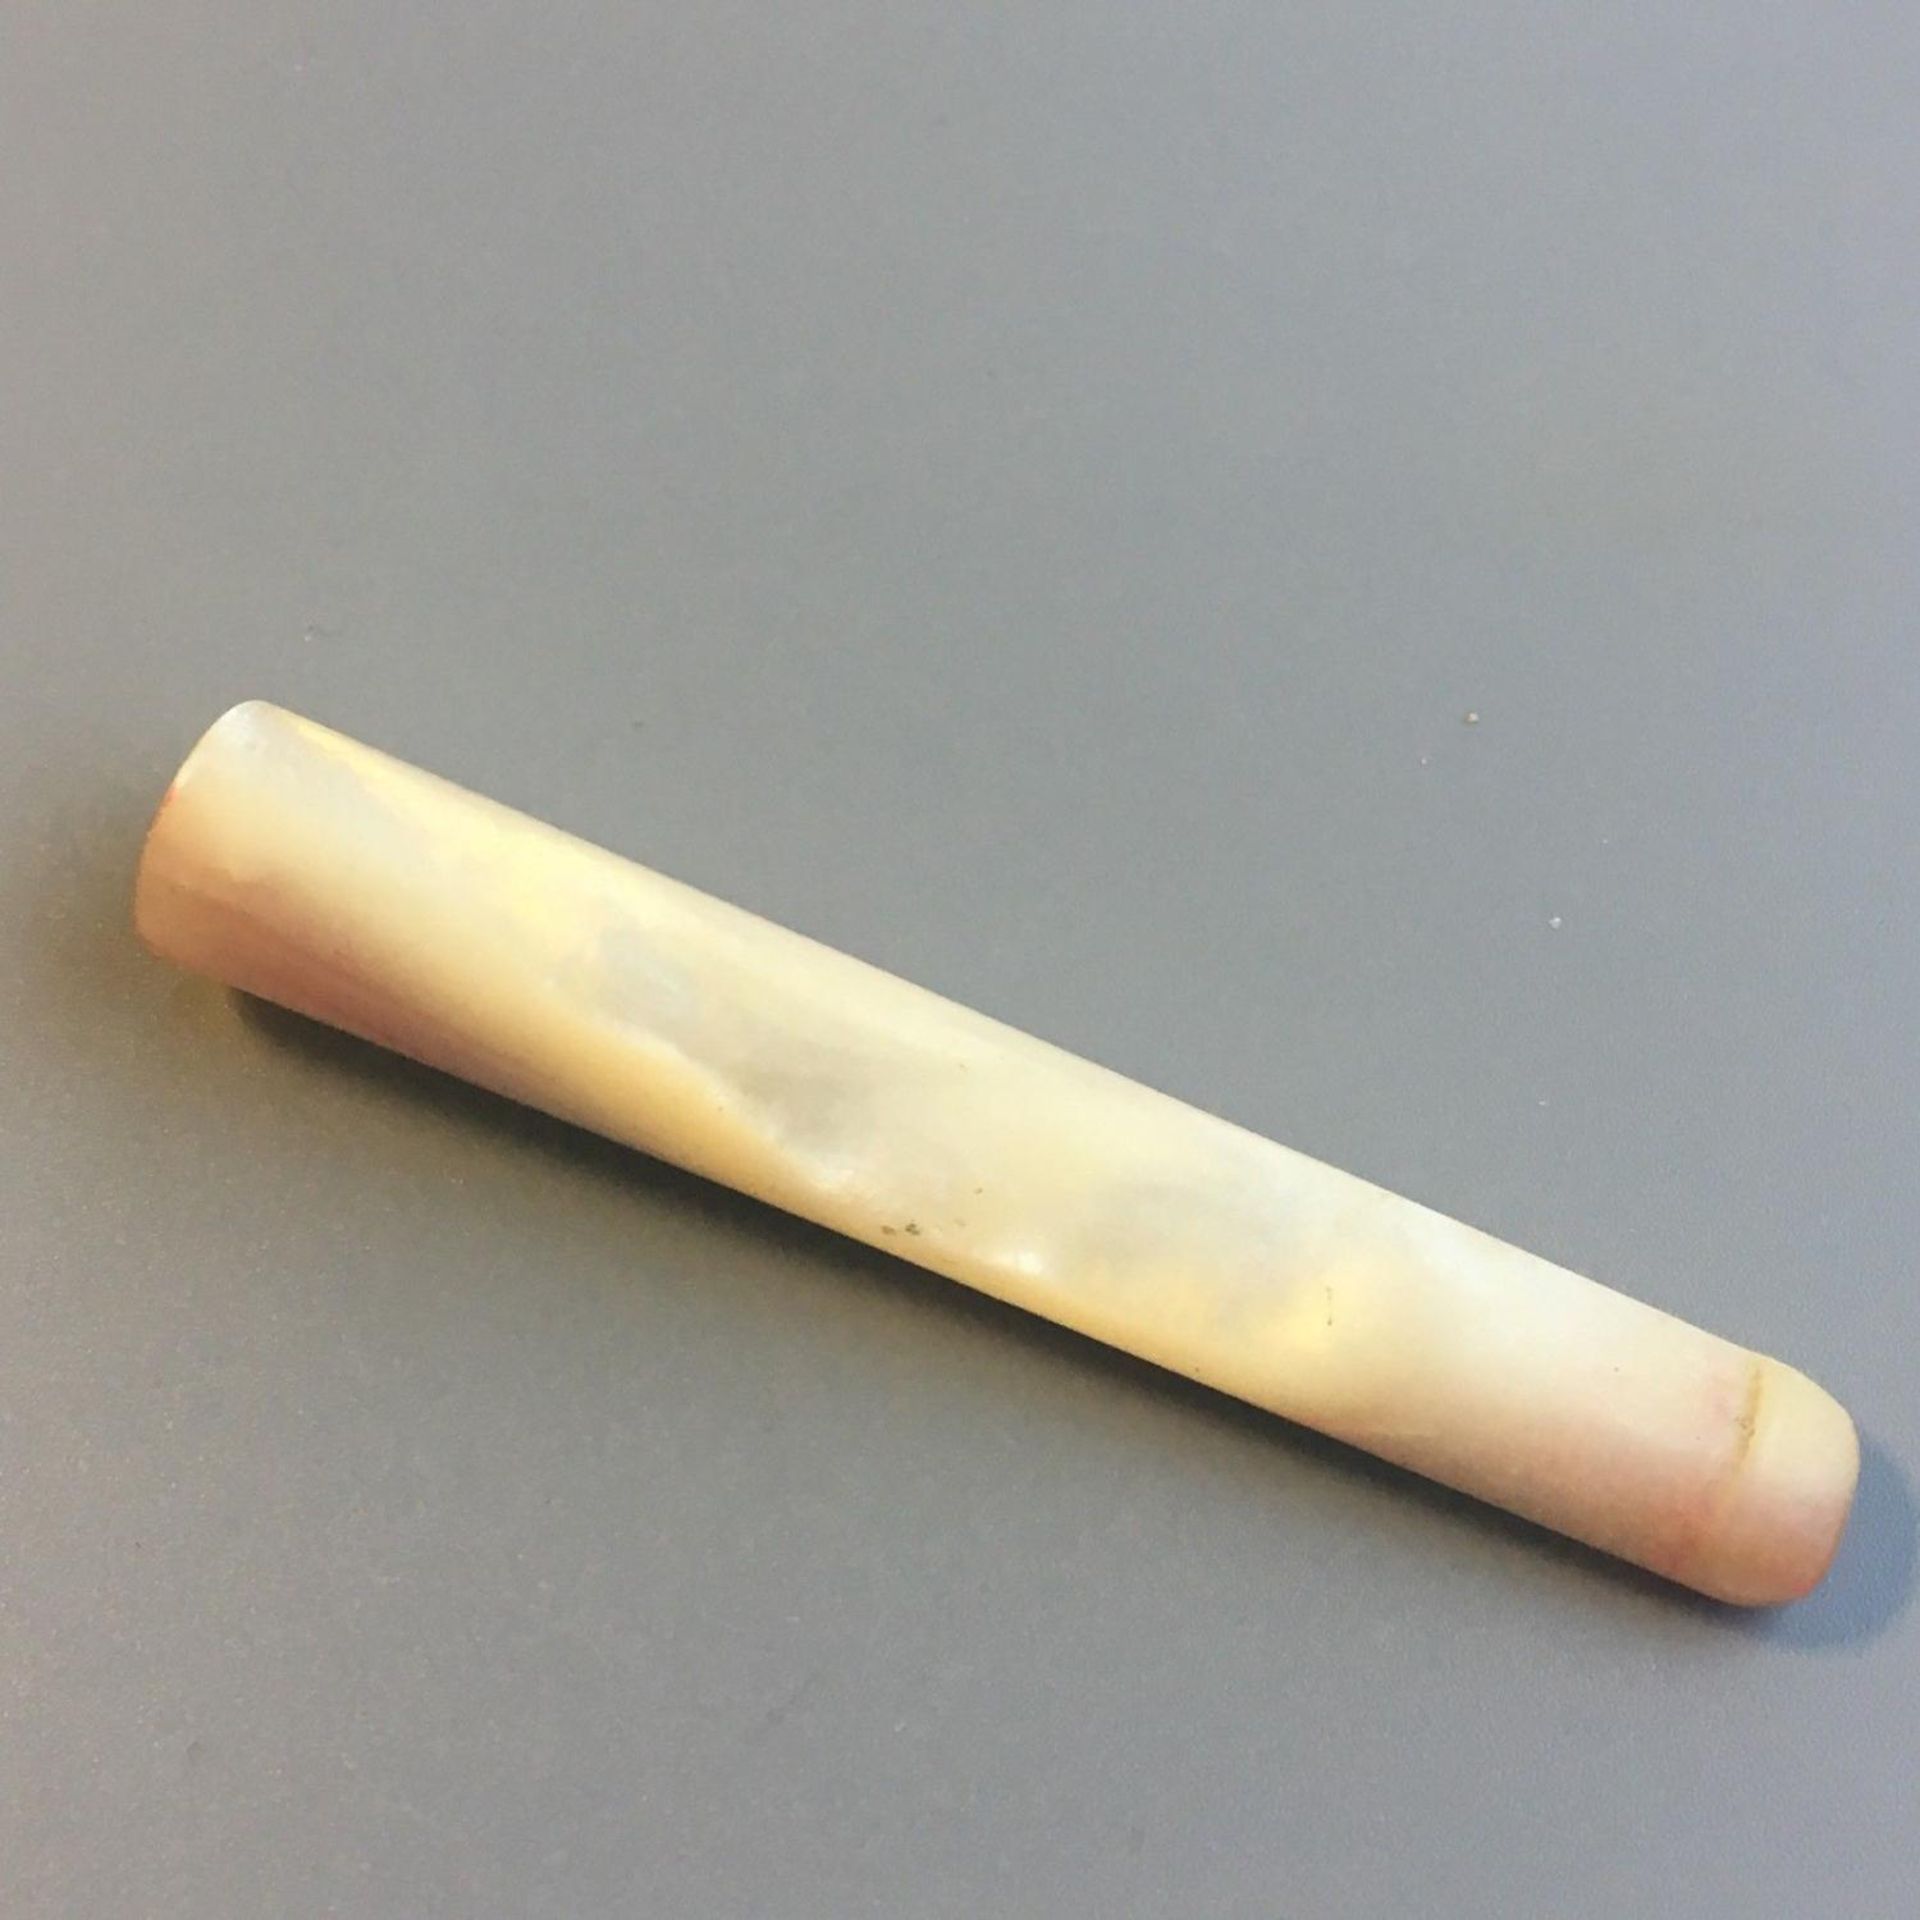 Antique mother of pearl cigarette holder cheroot - 7cm - pink grain highlights - Image 2 of 2